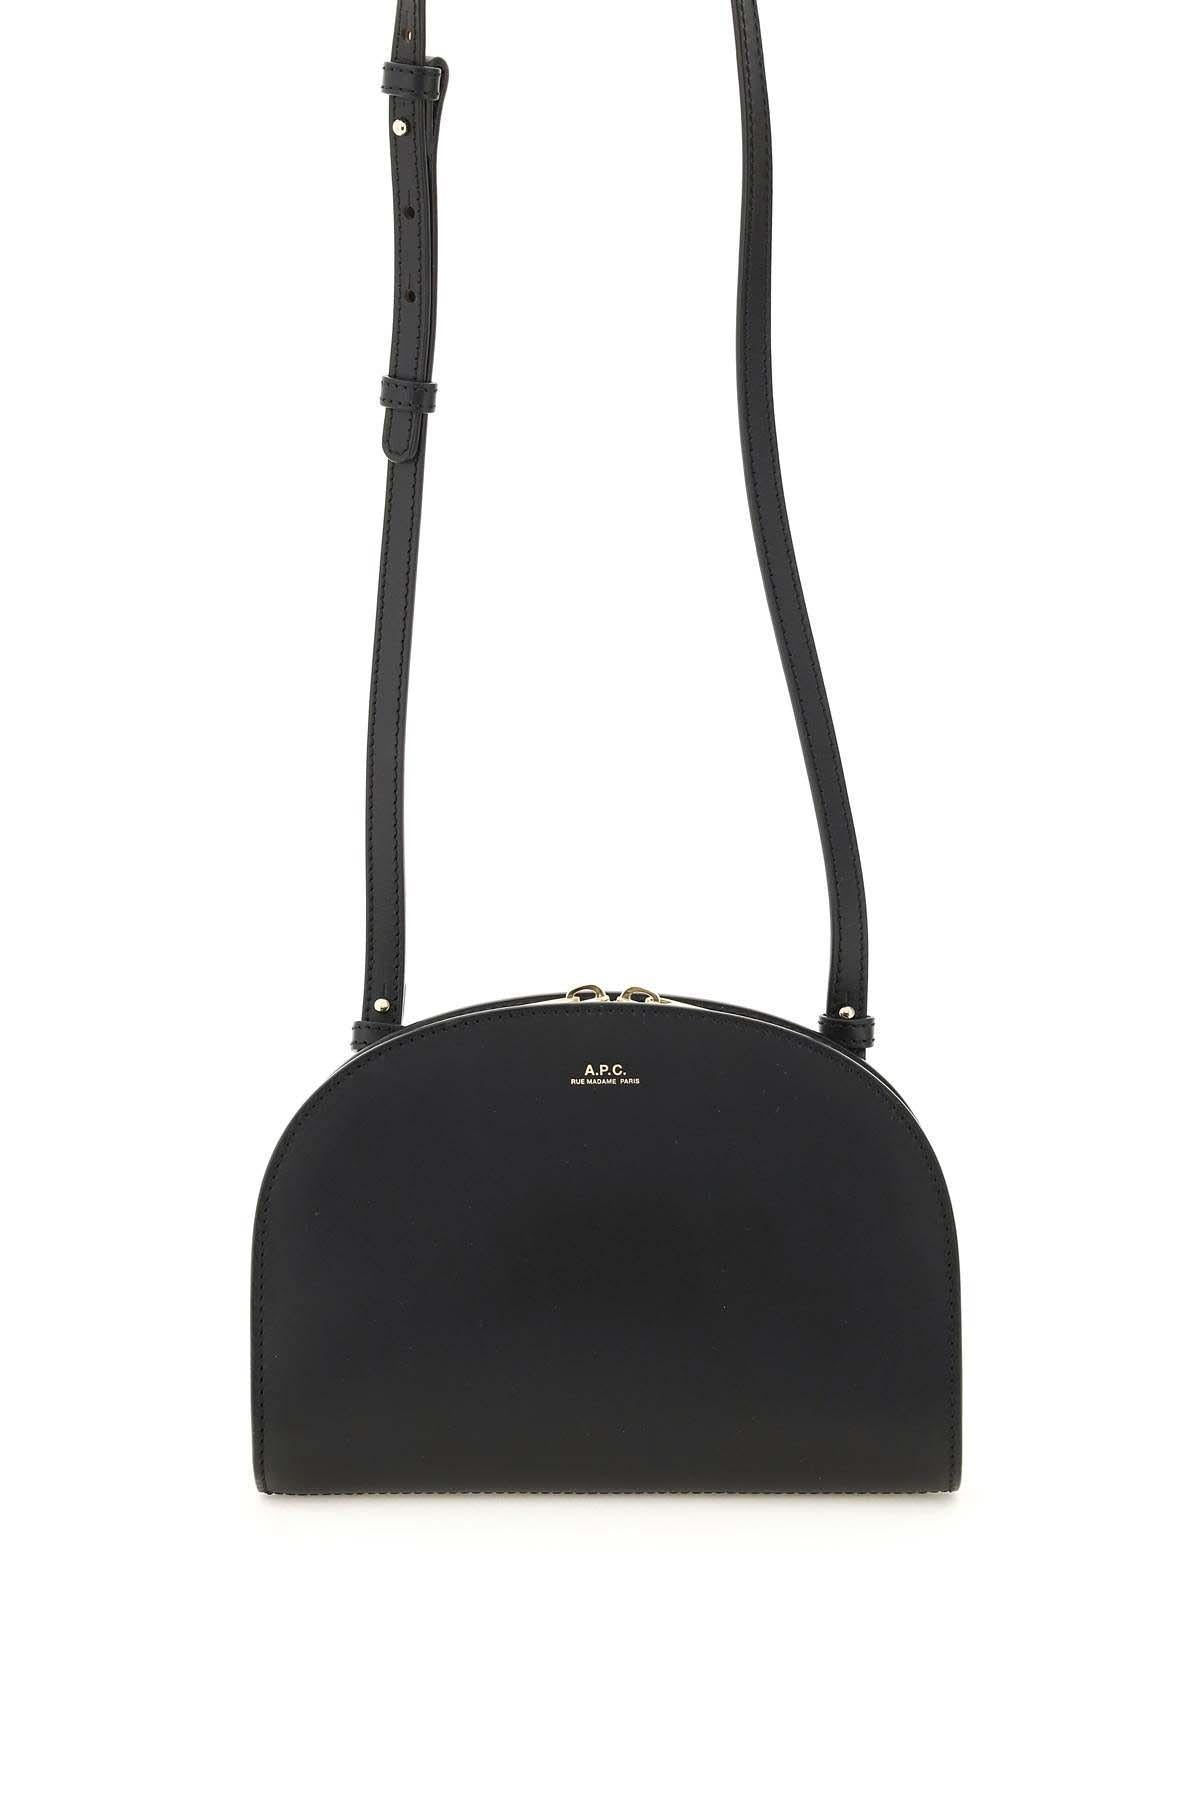 Demi Lune leather handbag